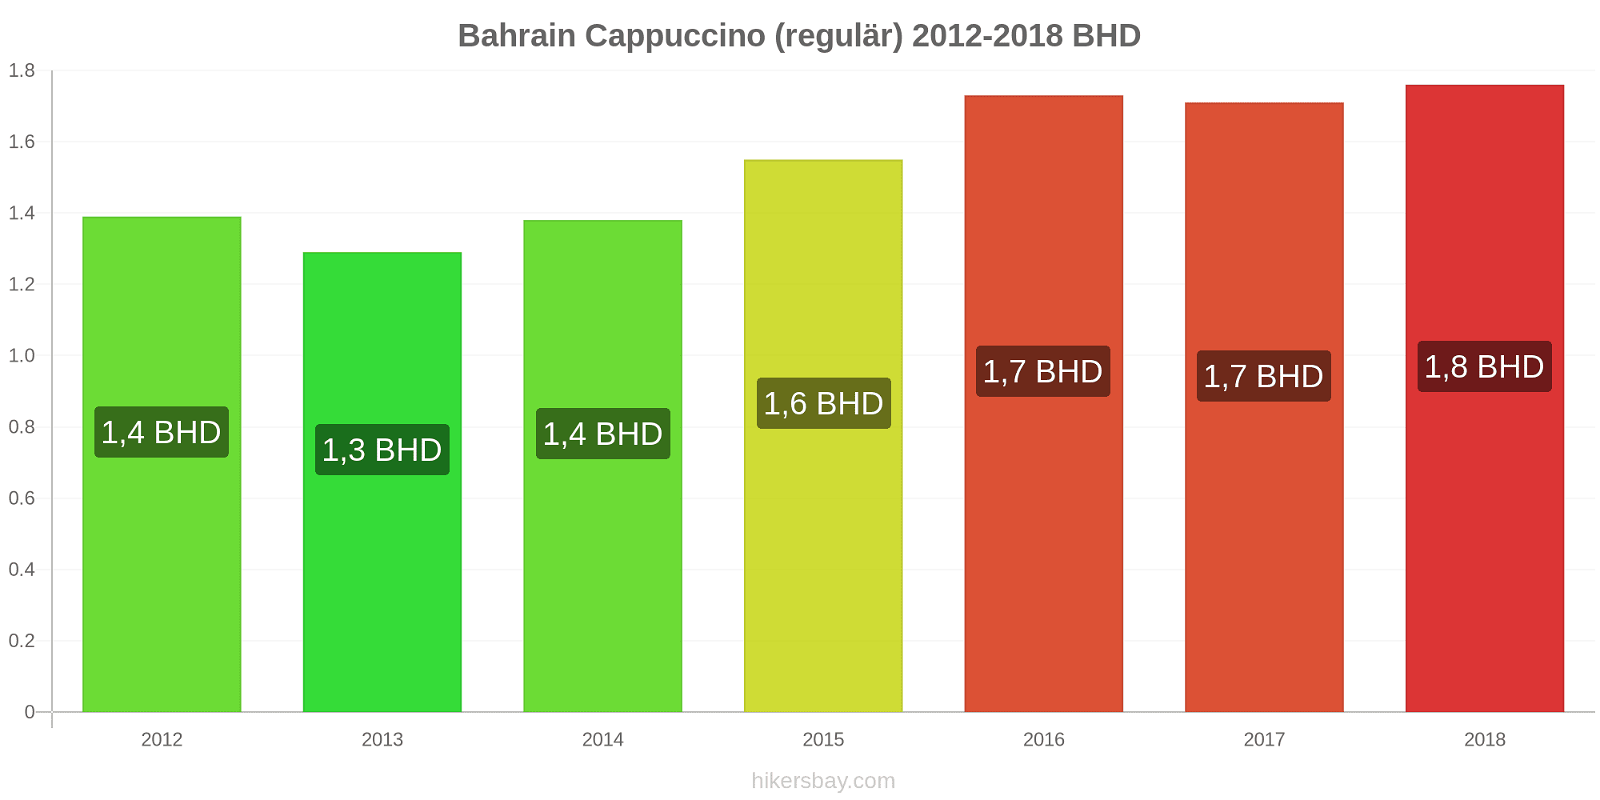 Bahrain Preisänderungen Cappuccino (regulär) hikersbay.com